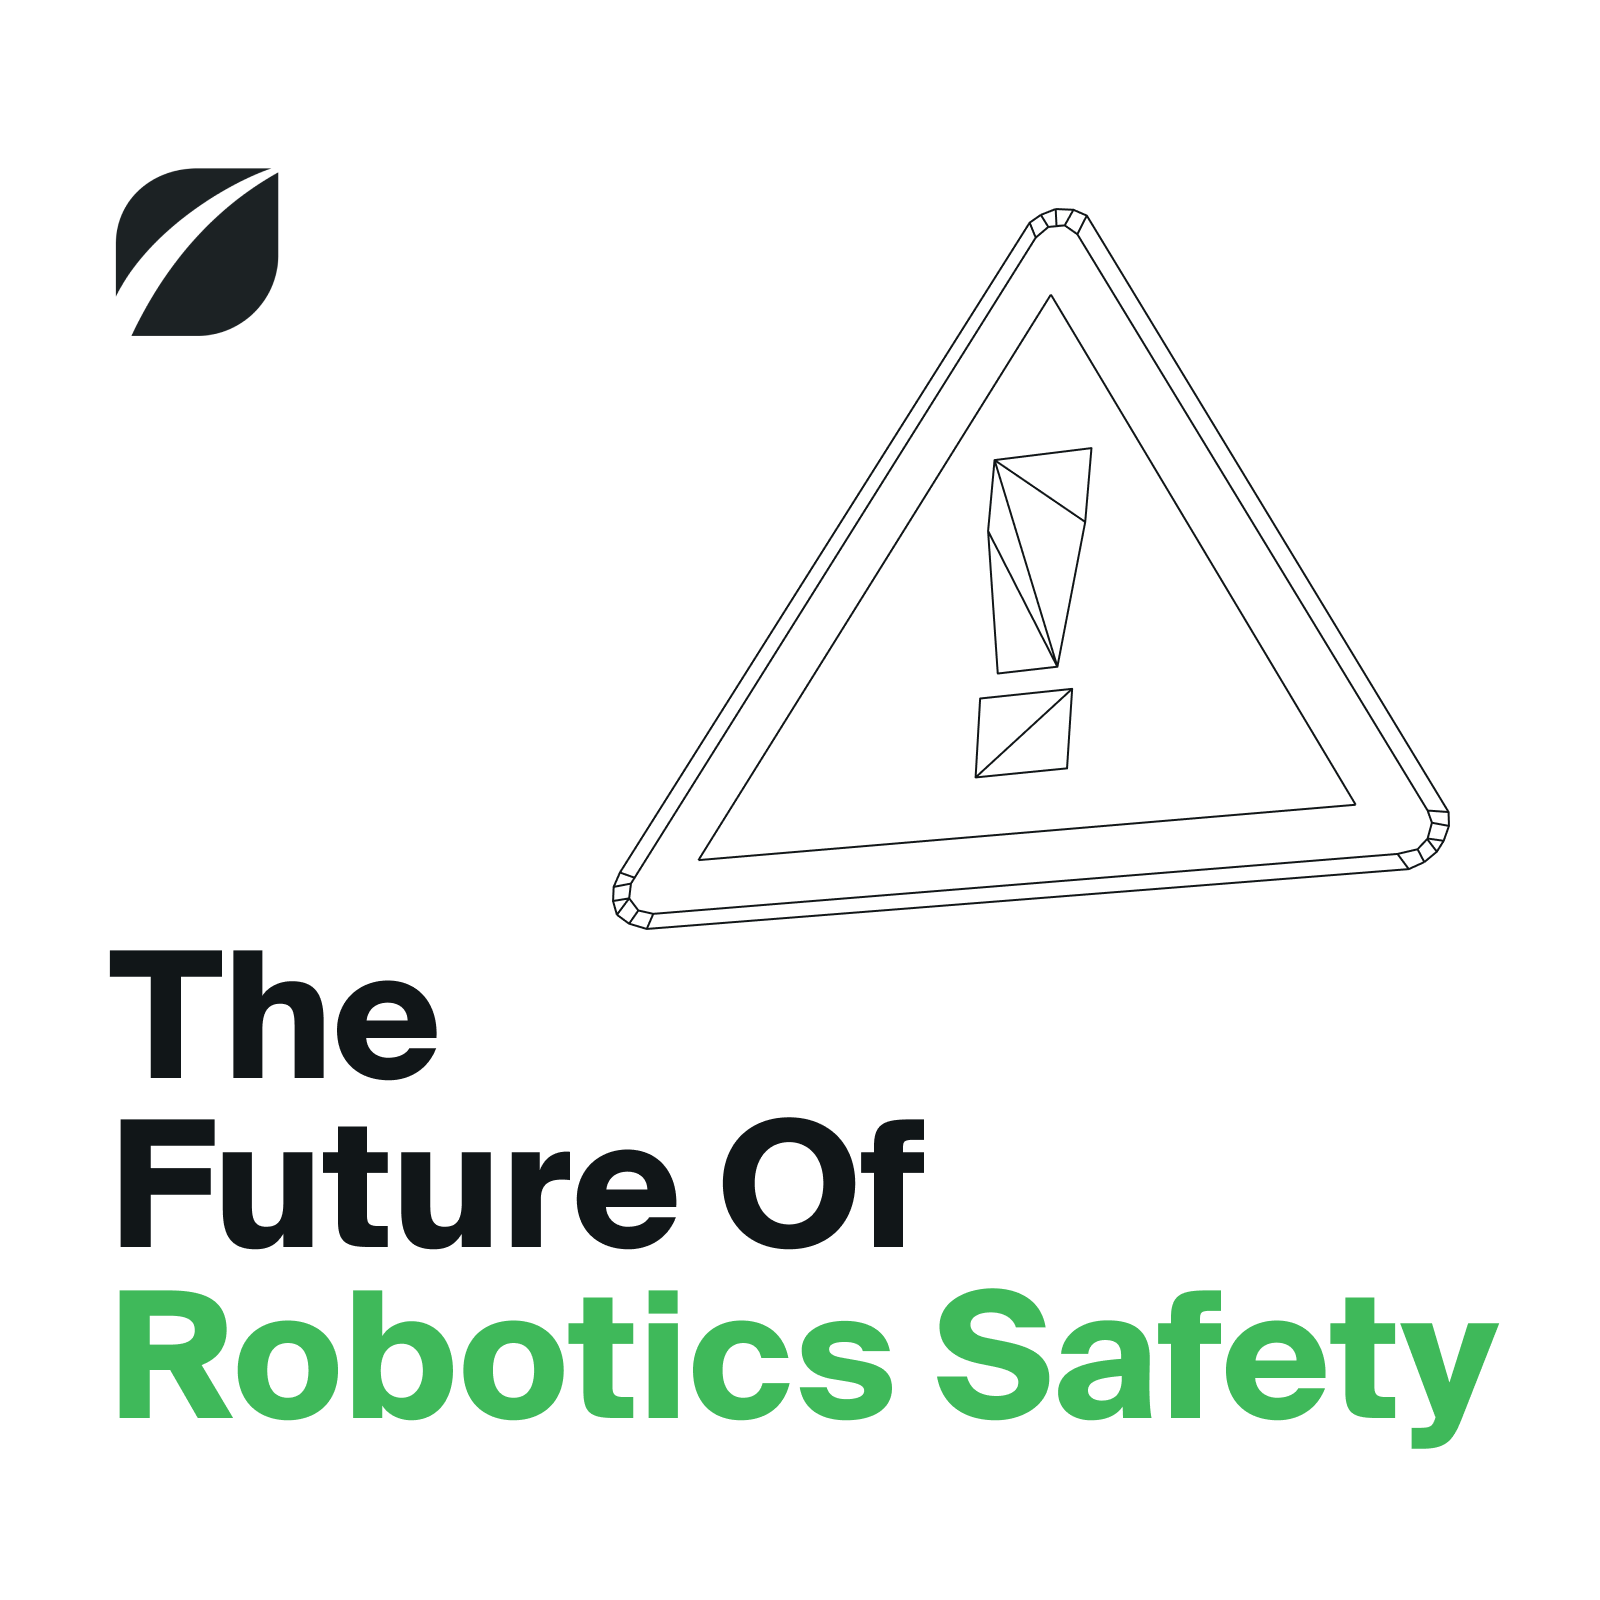 The Future Of Robotics Safety